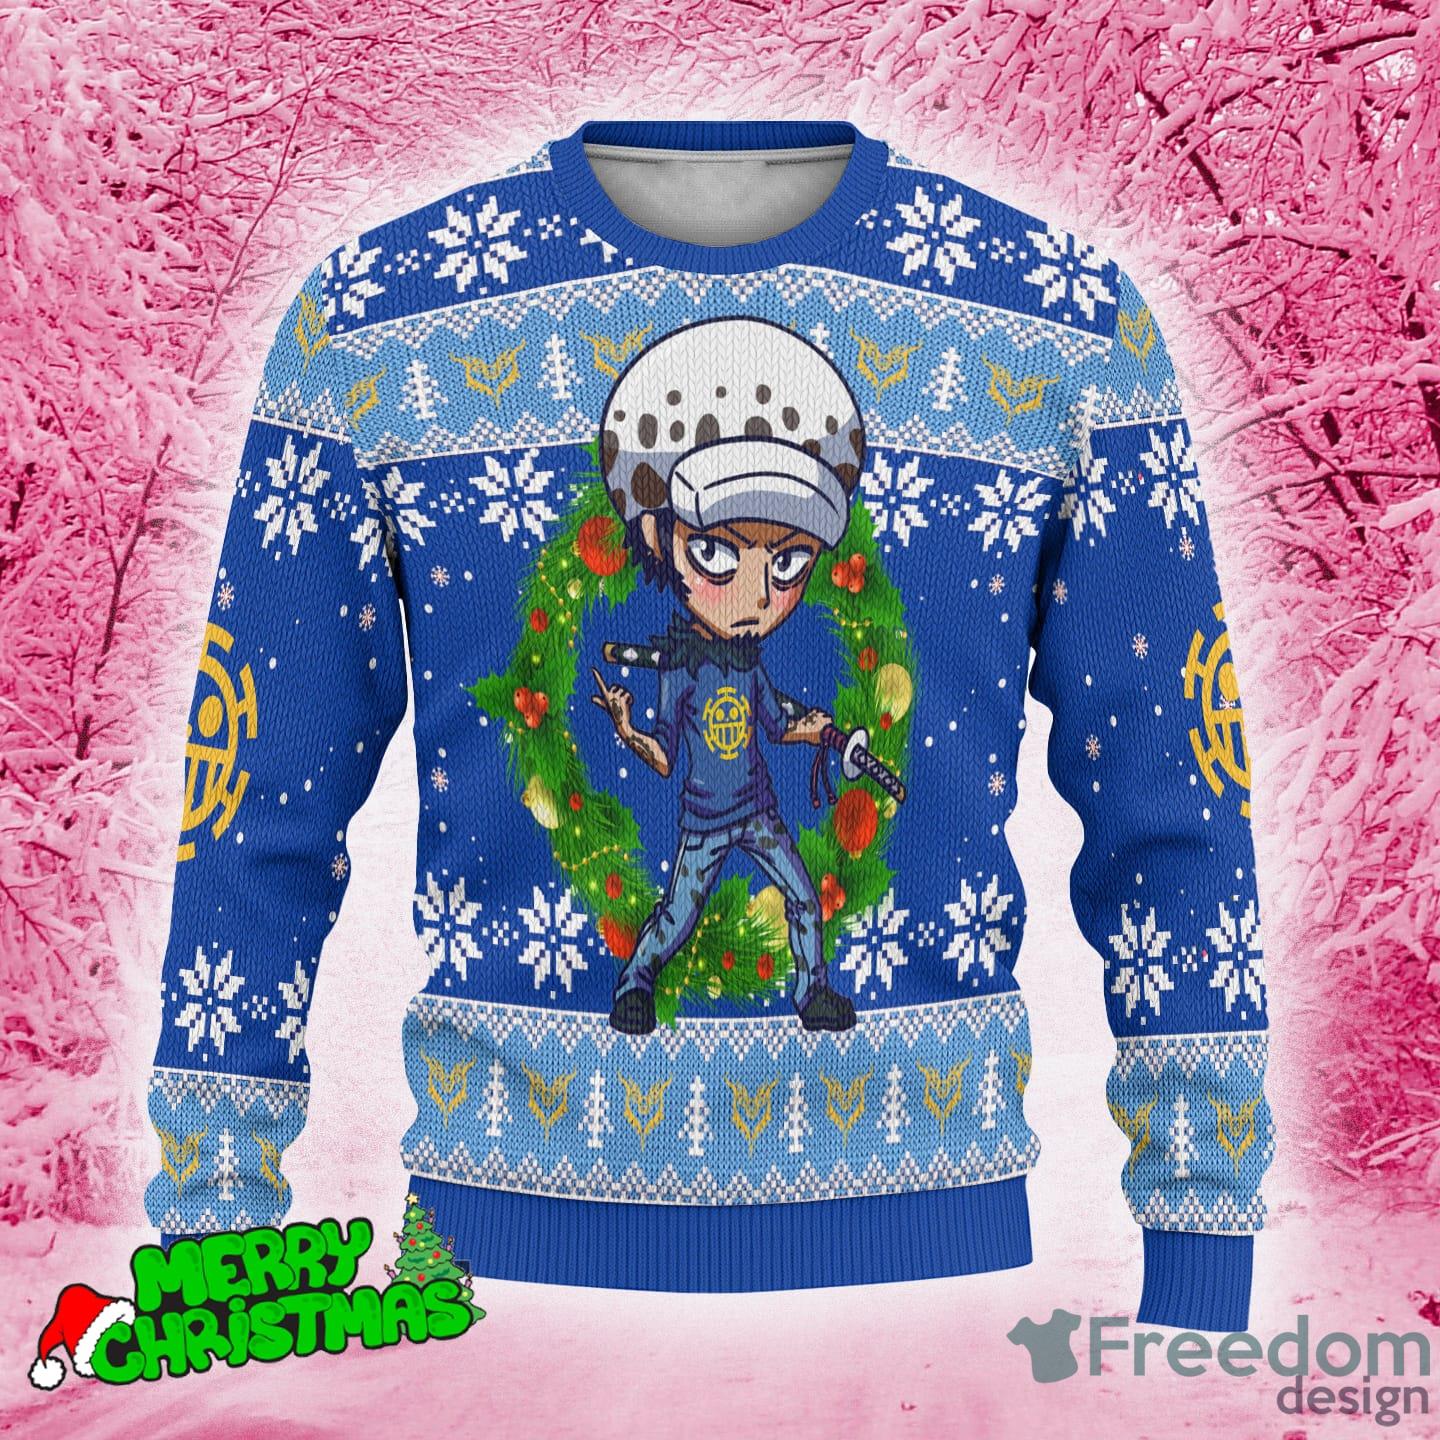 Trafalgar Law One Piece Merry Christmas Ugly Sweater